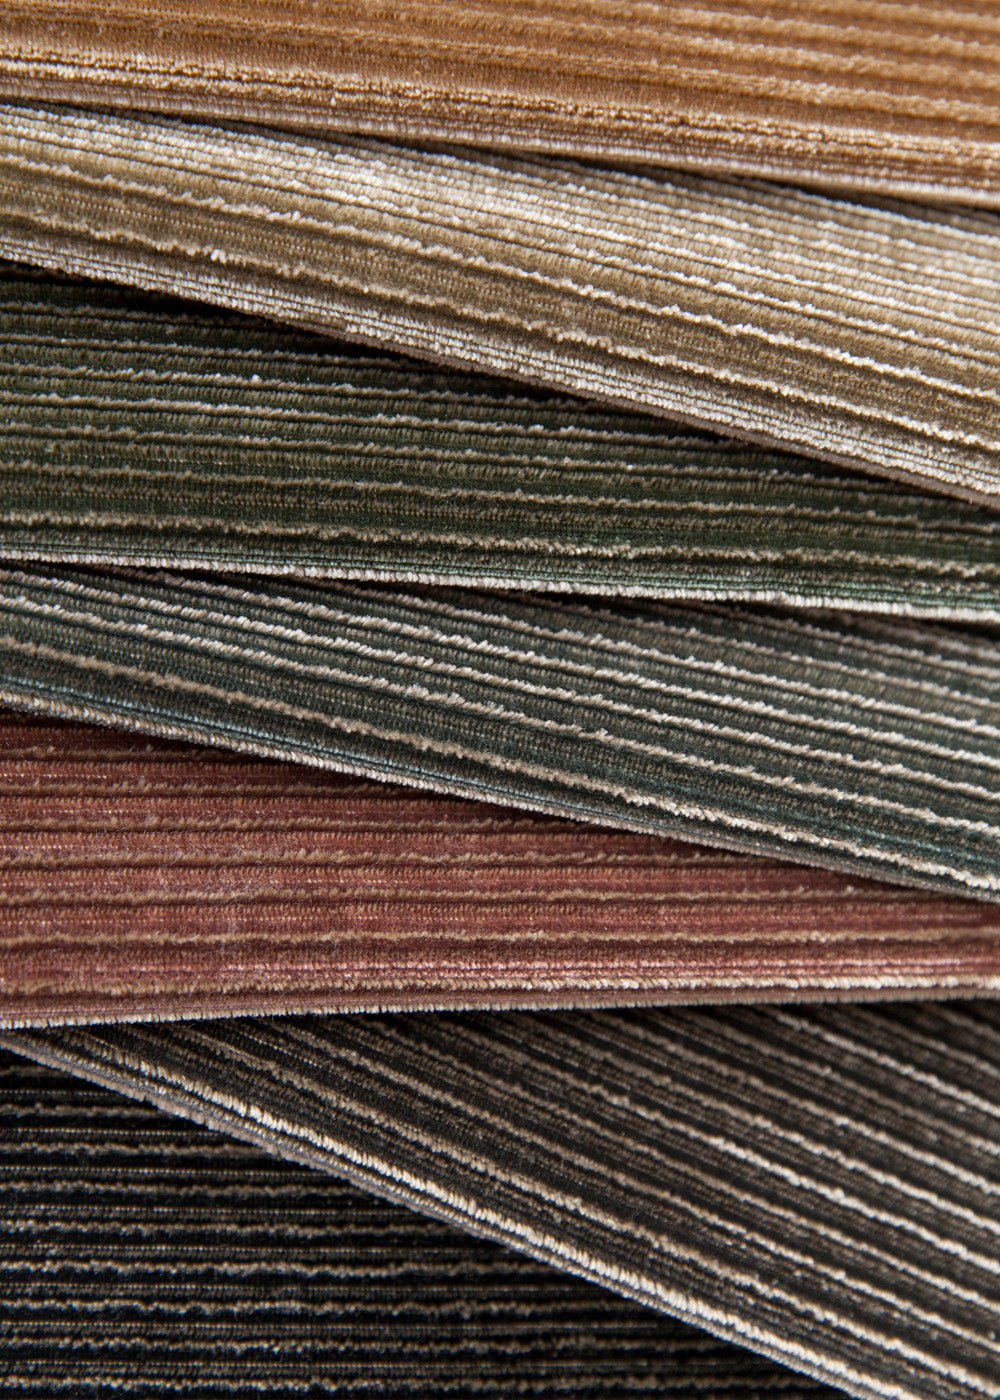 stack of jewel toned velvet fabrics with horizontal ribbed texture